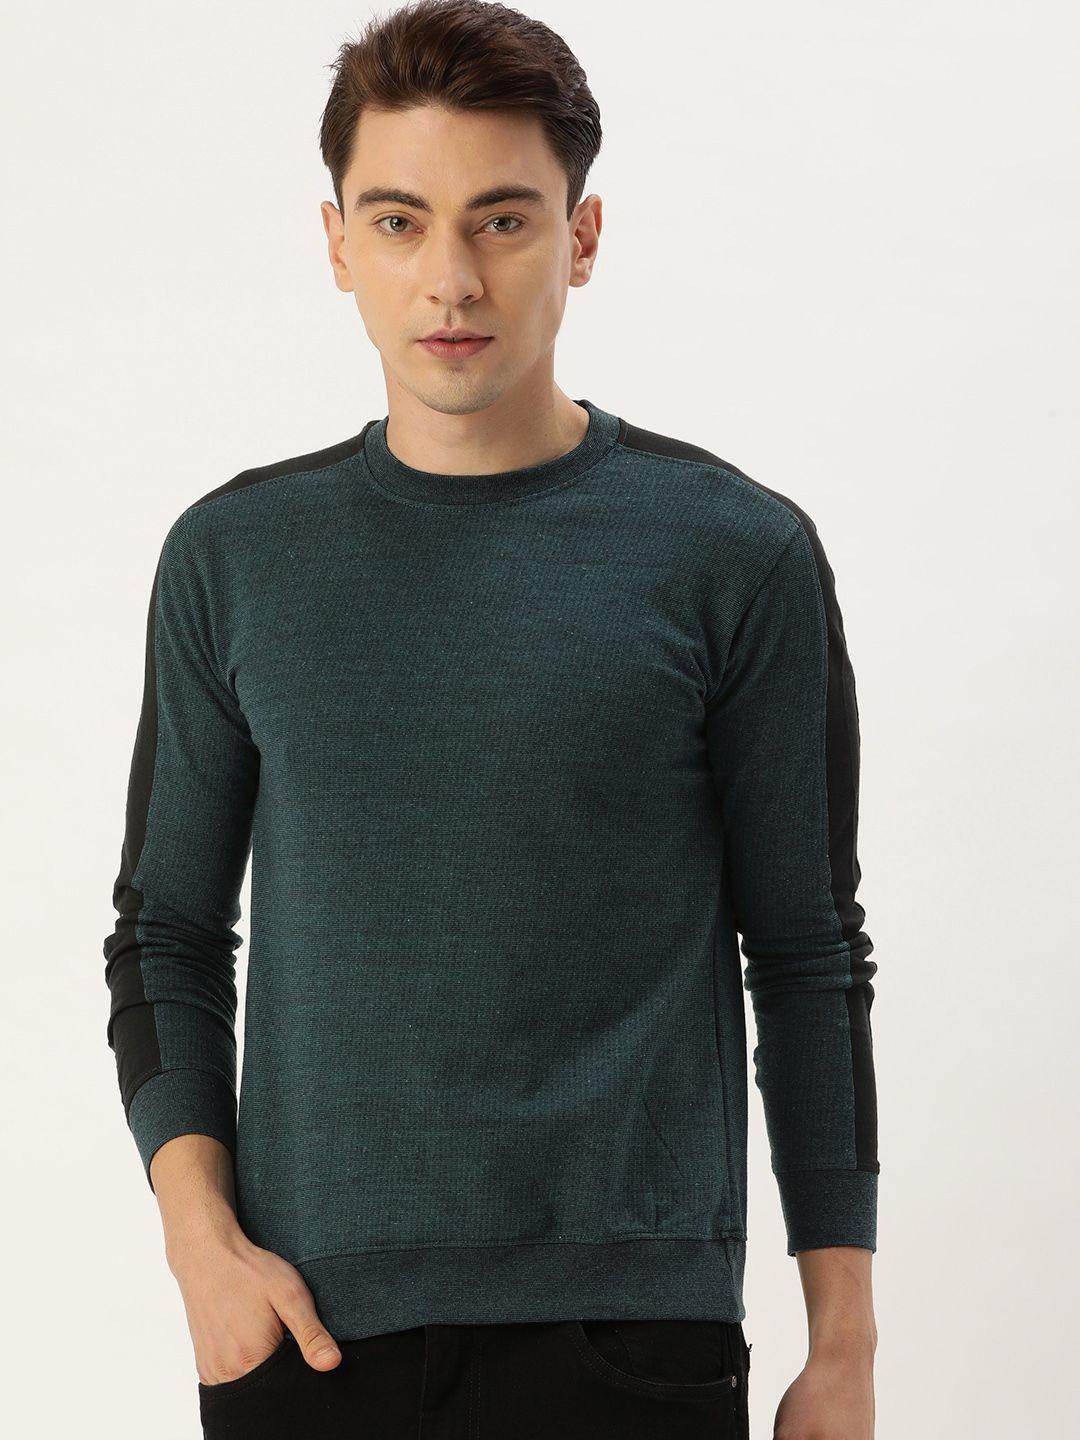 arise-men-teal-green-pure-cotton-sweatshirt